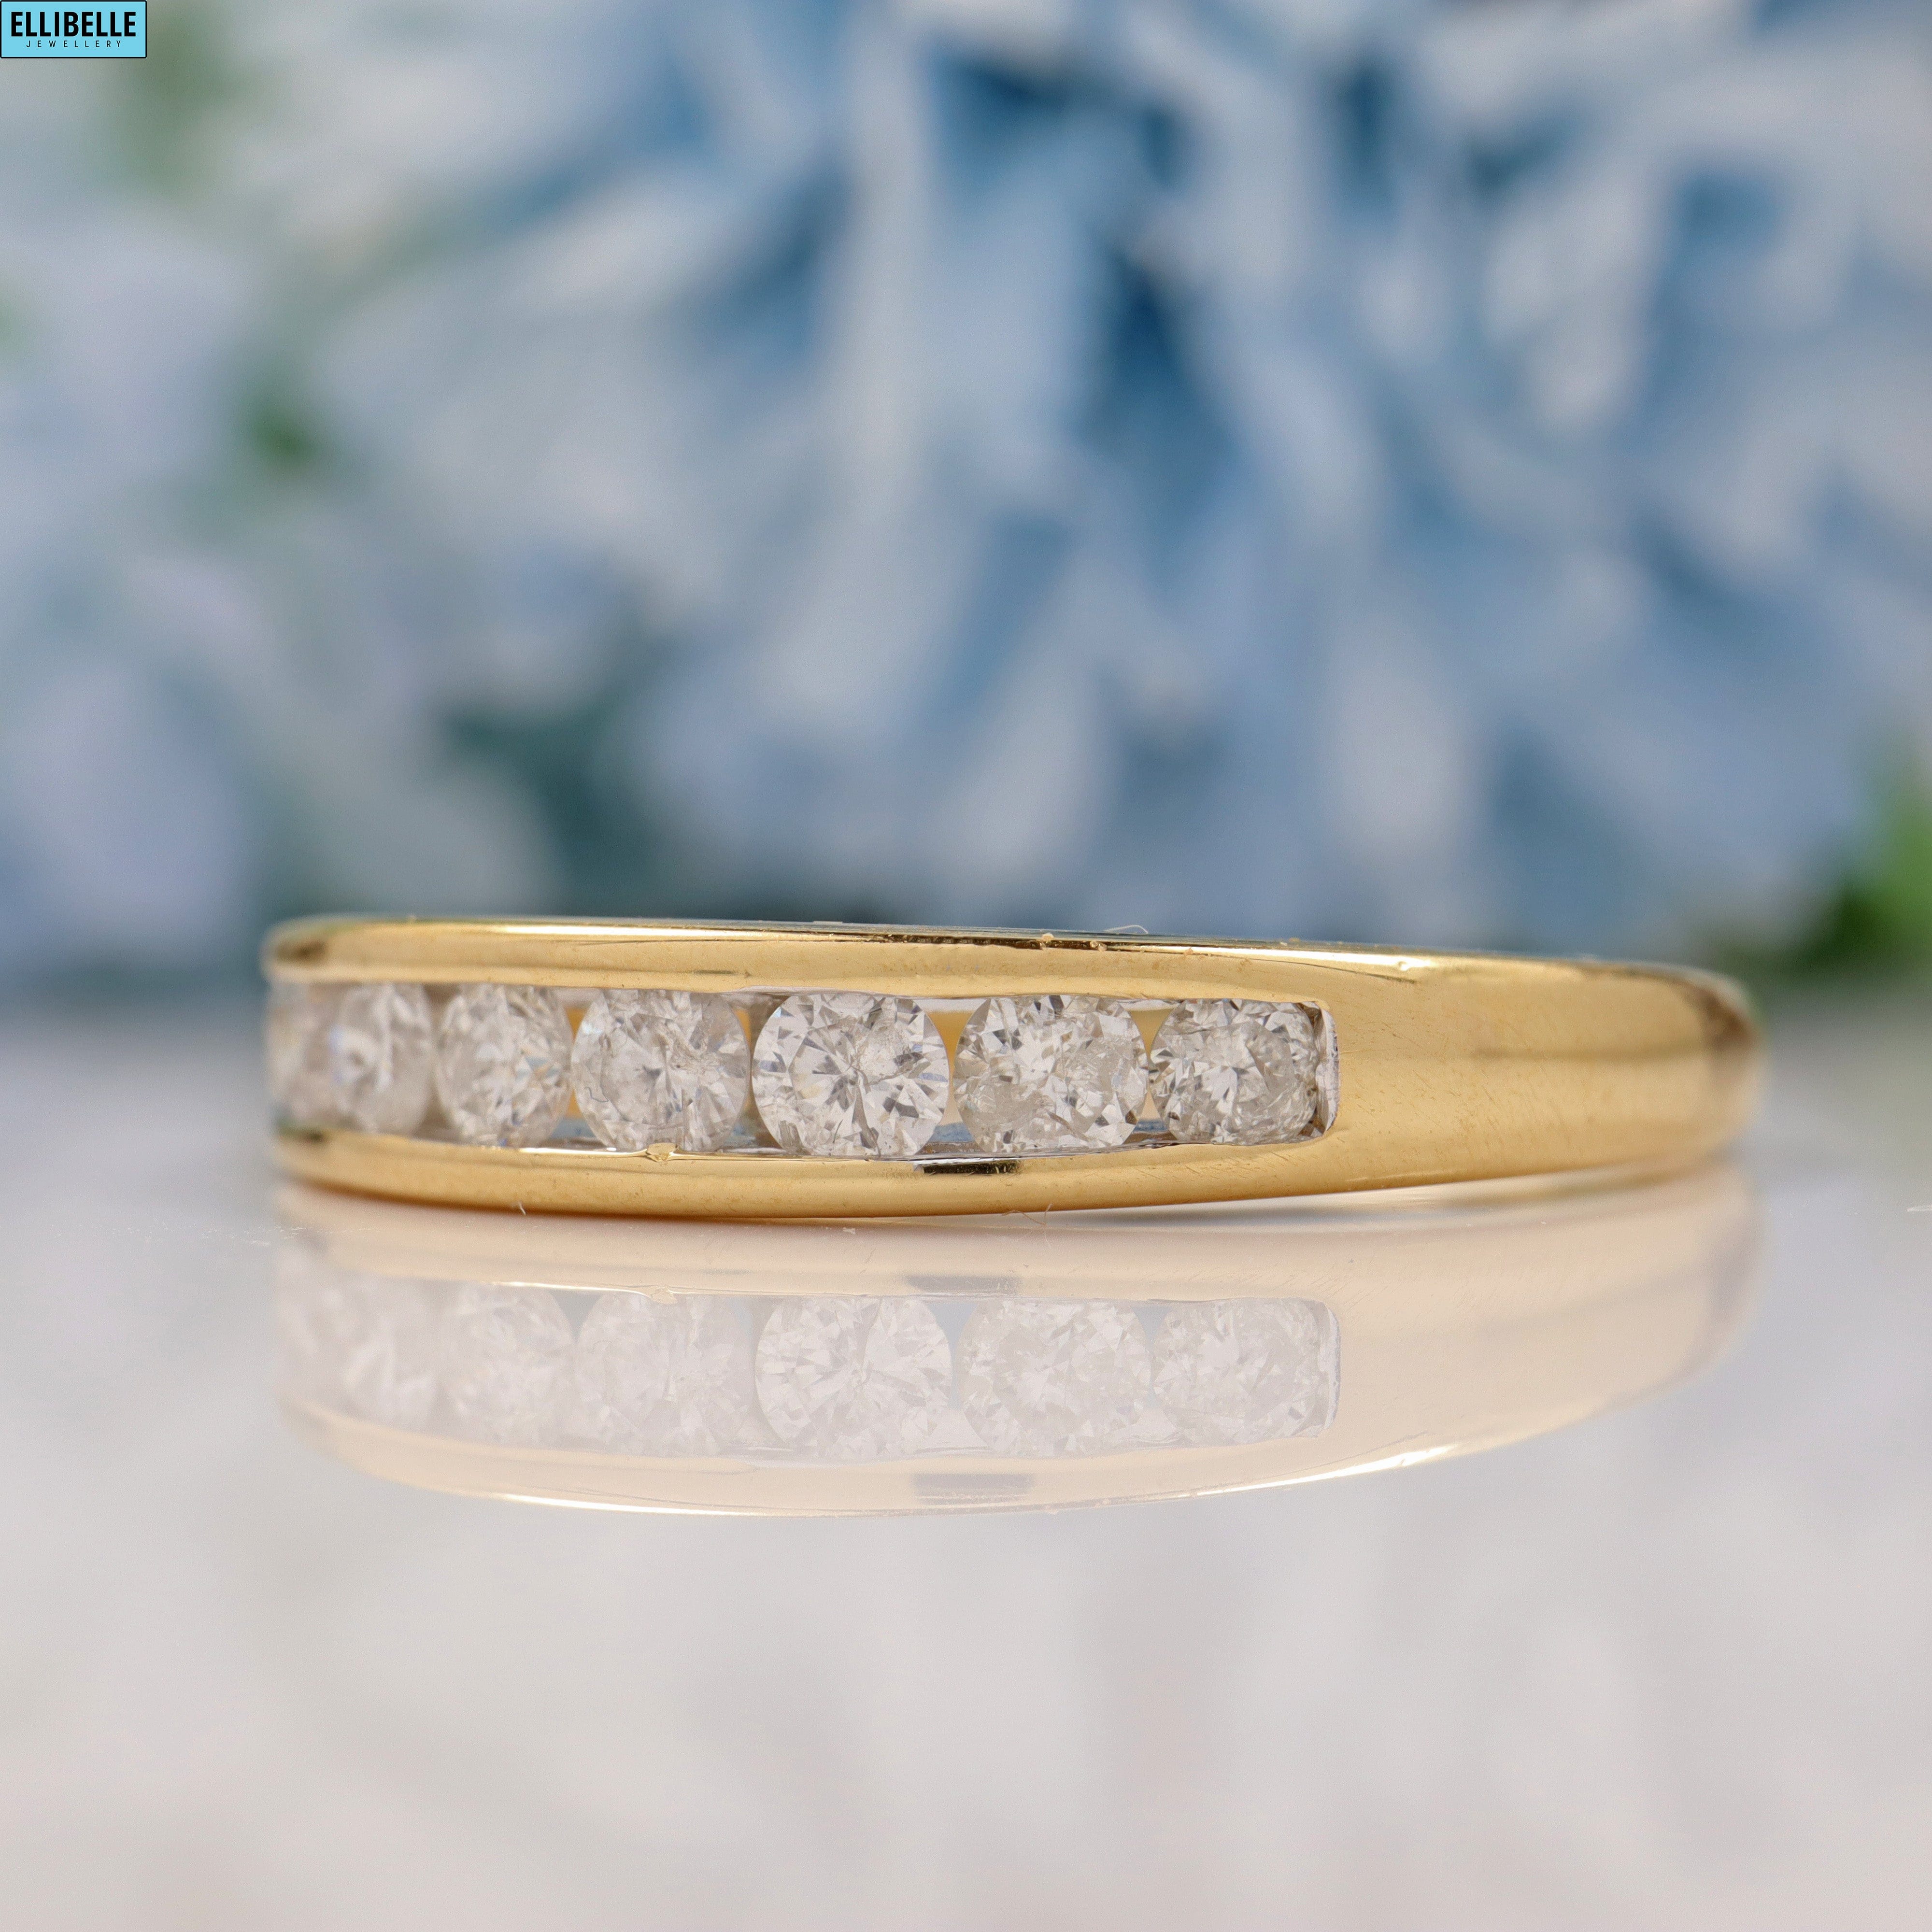 Ellibelle Jewellery VINTAGE 18CT GOLD DIAMOND ETERNITY WEDDING BAND RING